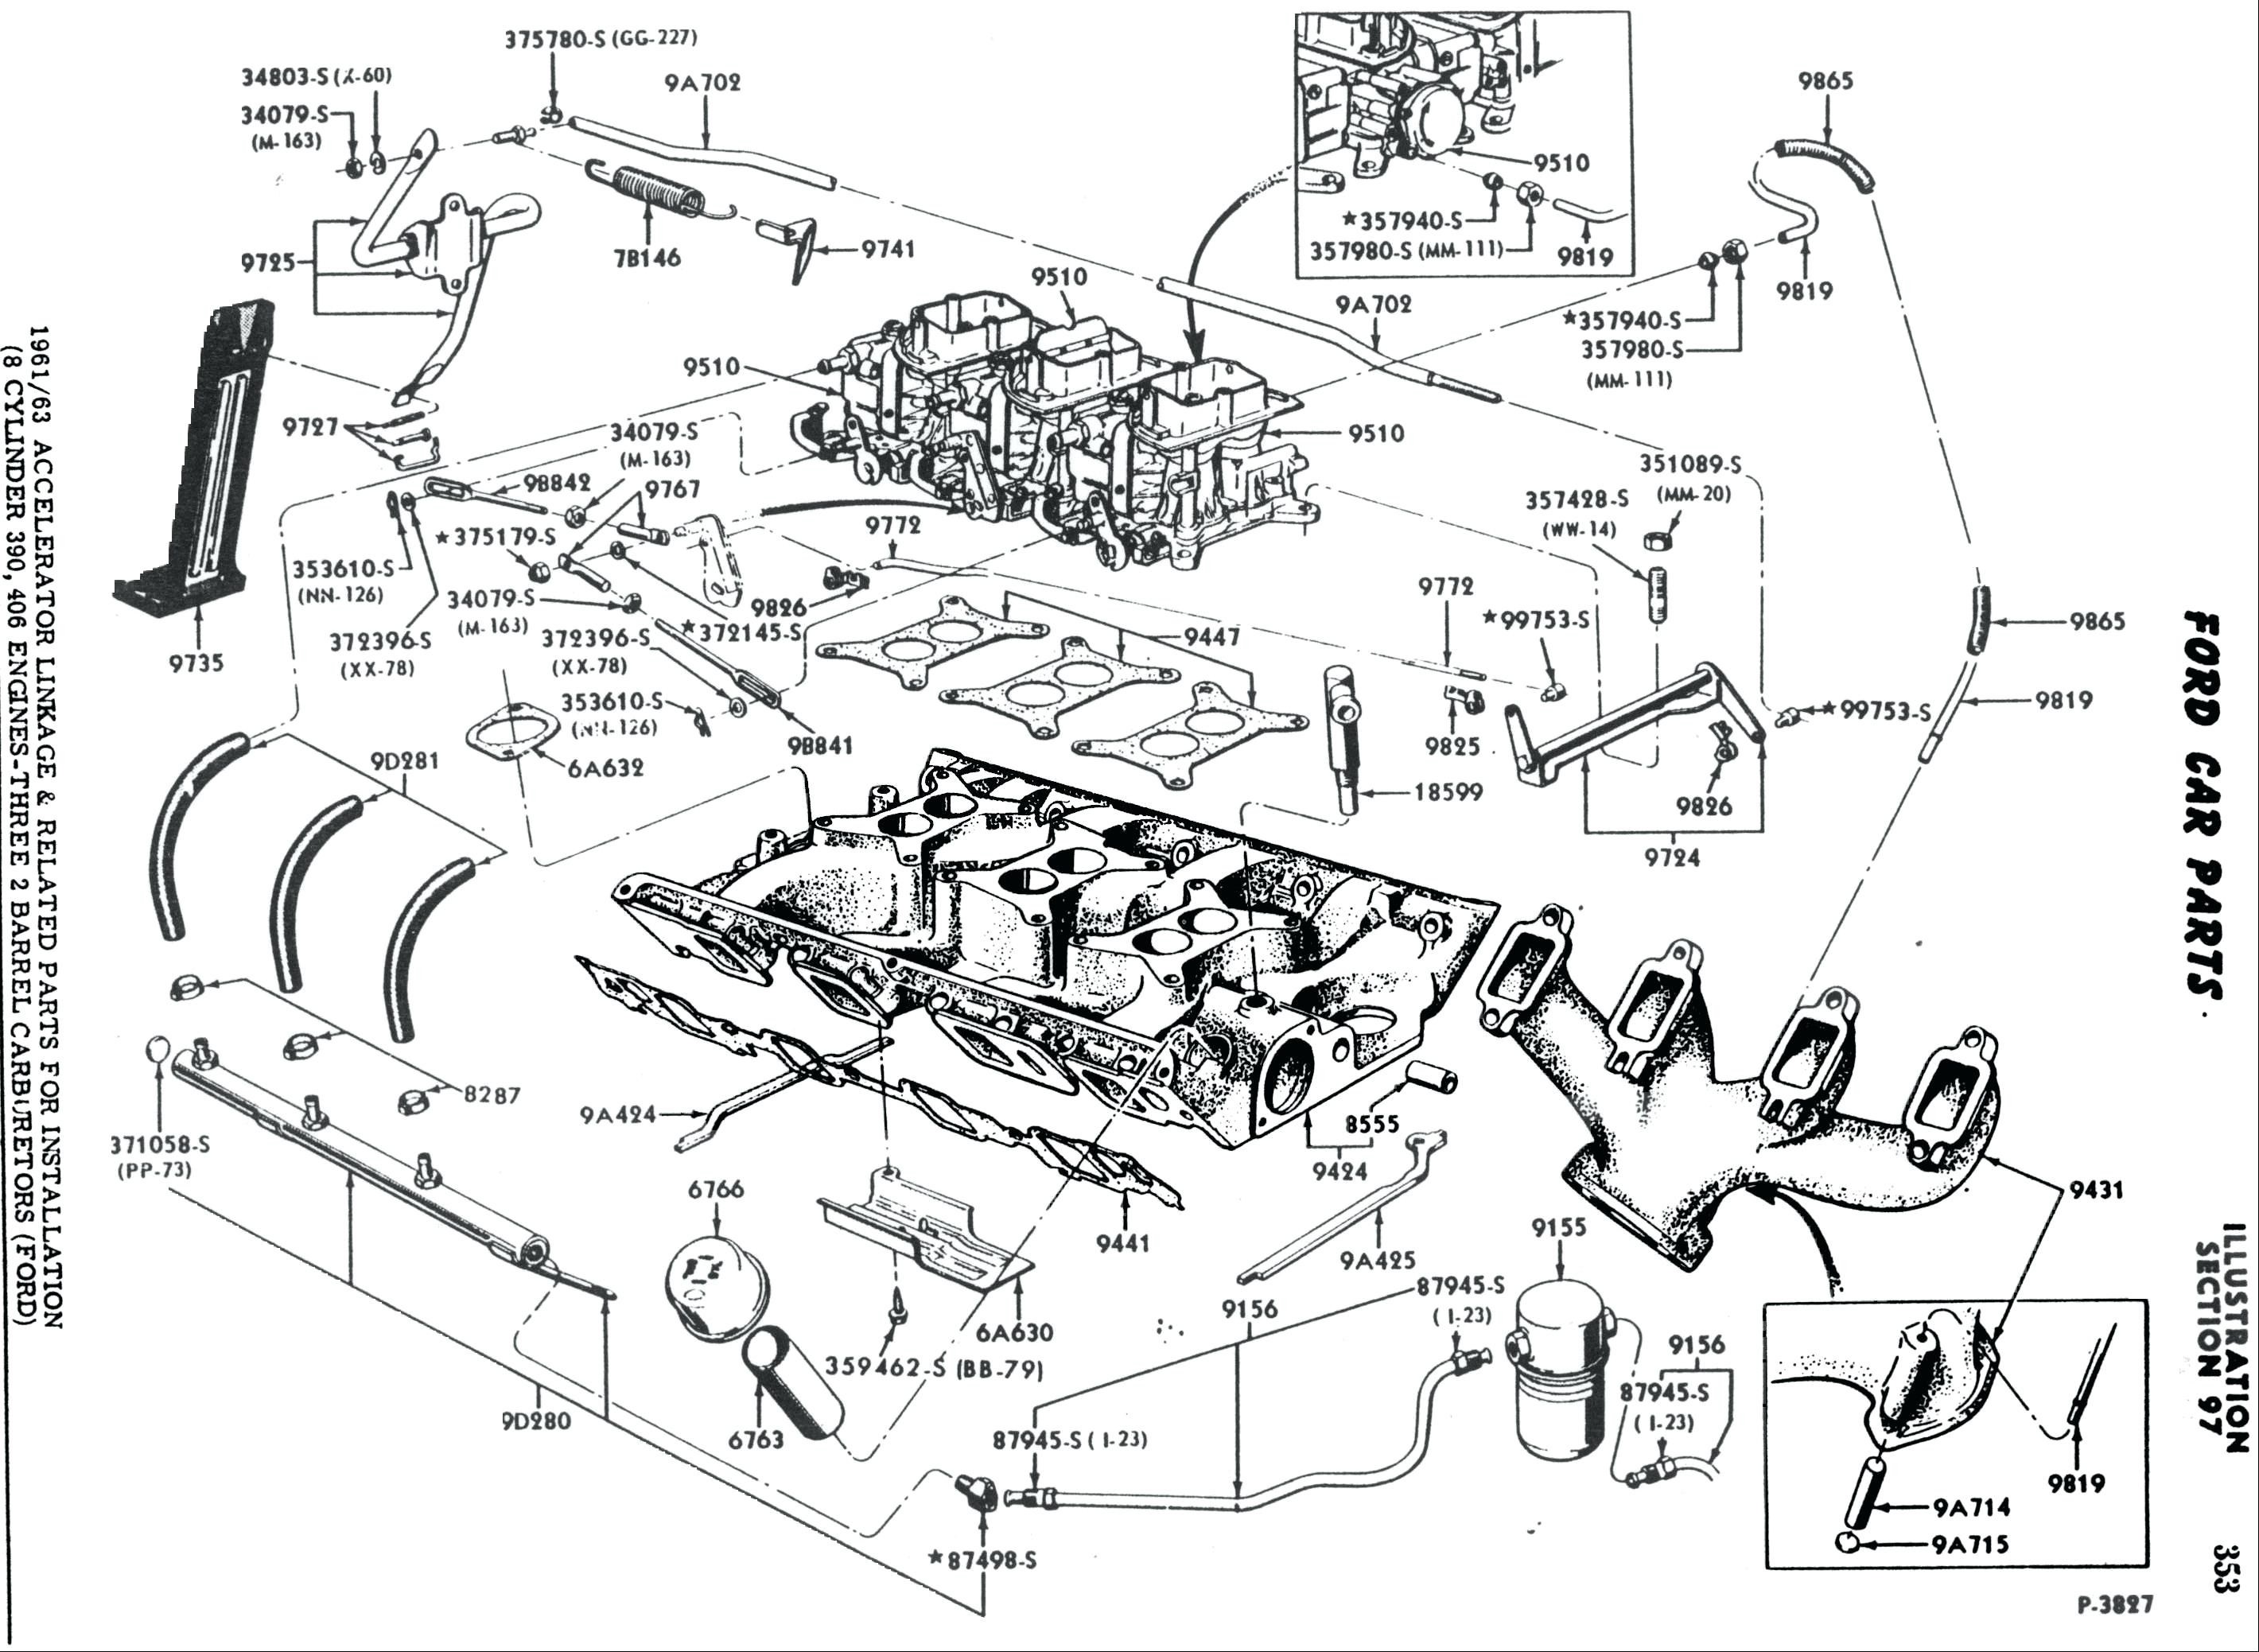 Motor Engine Diagram Wrg 7679] Car Engine Schematics Of Motor Engine Diagram